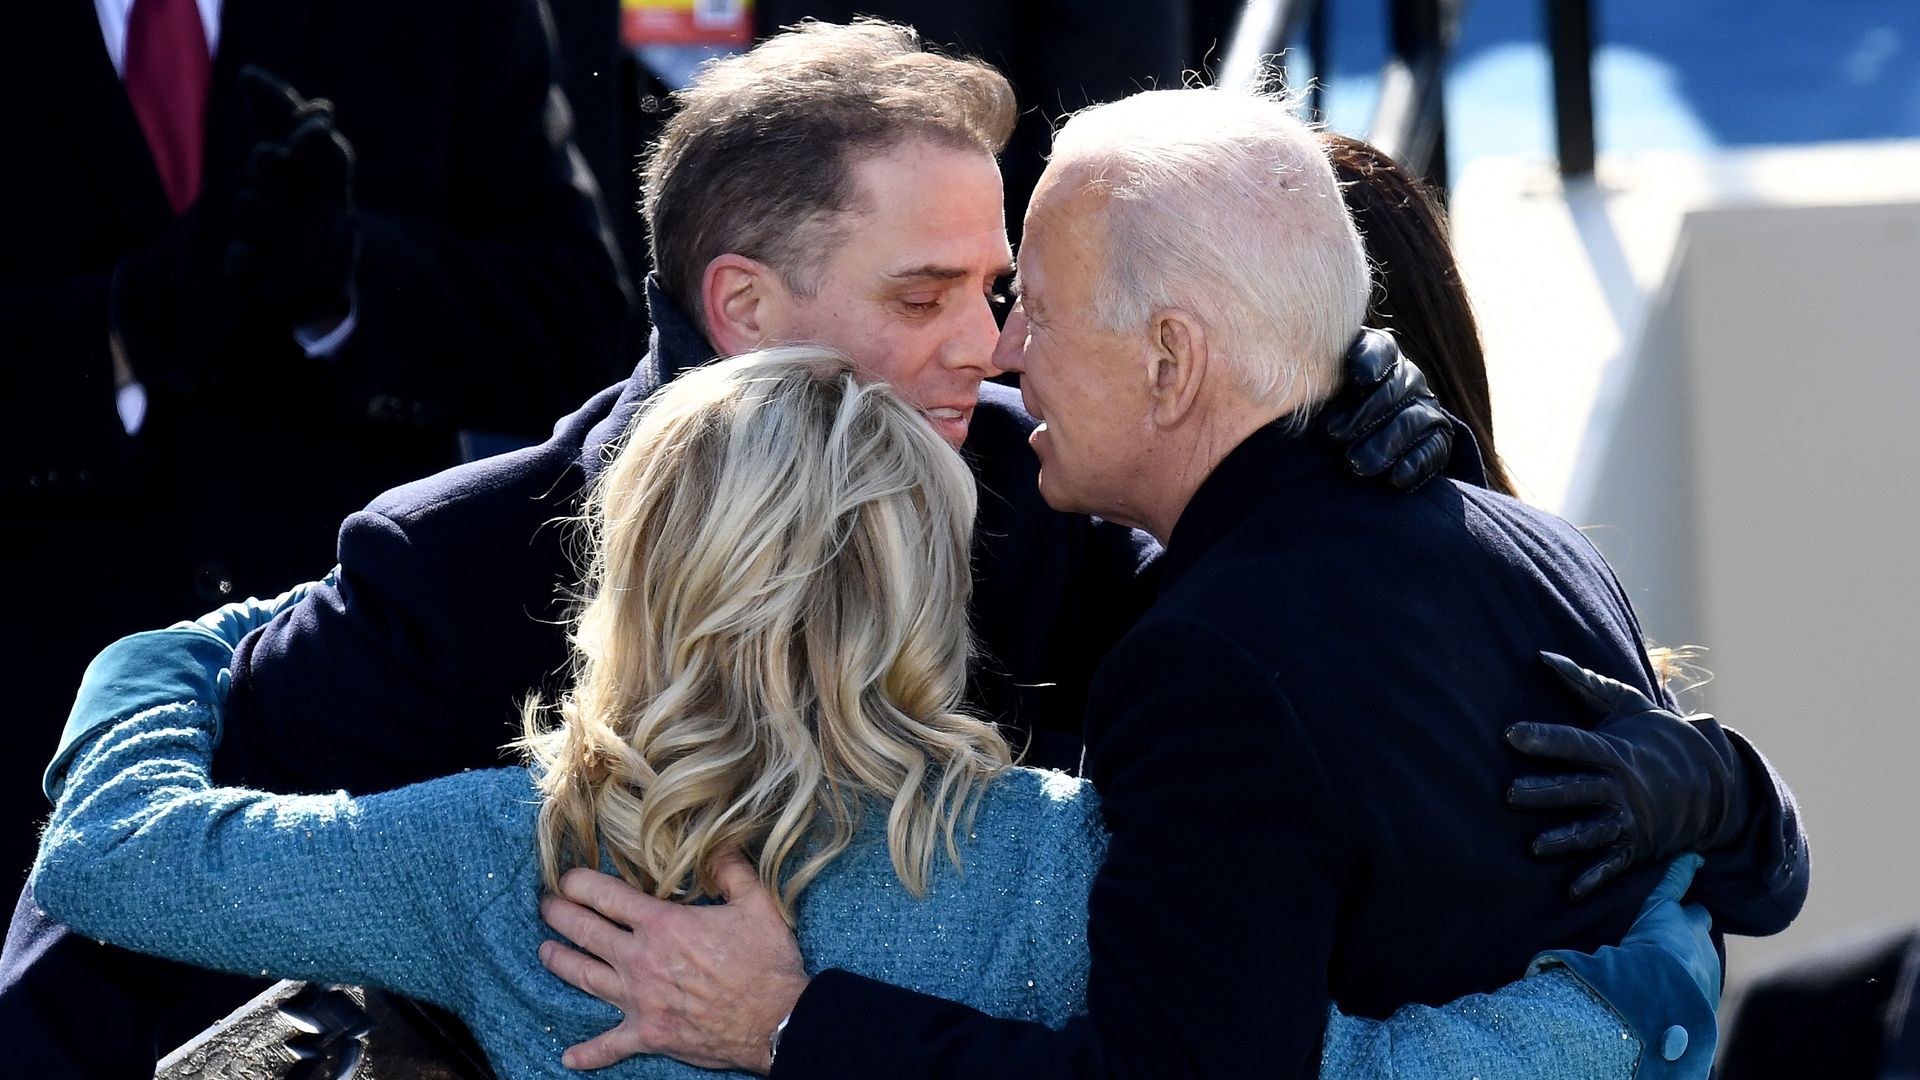 Joe Biden is seen hugging Jill and Hunter Biden moments after being sworn in as president.